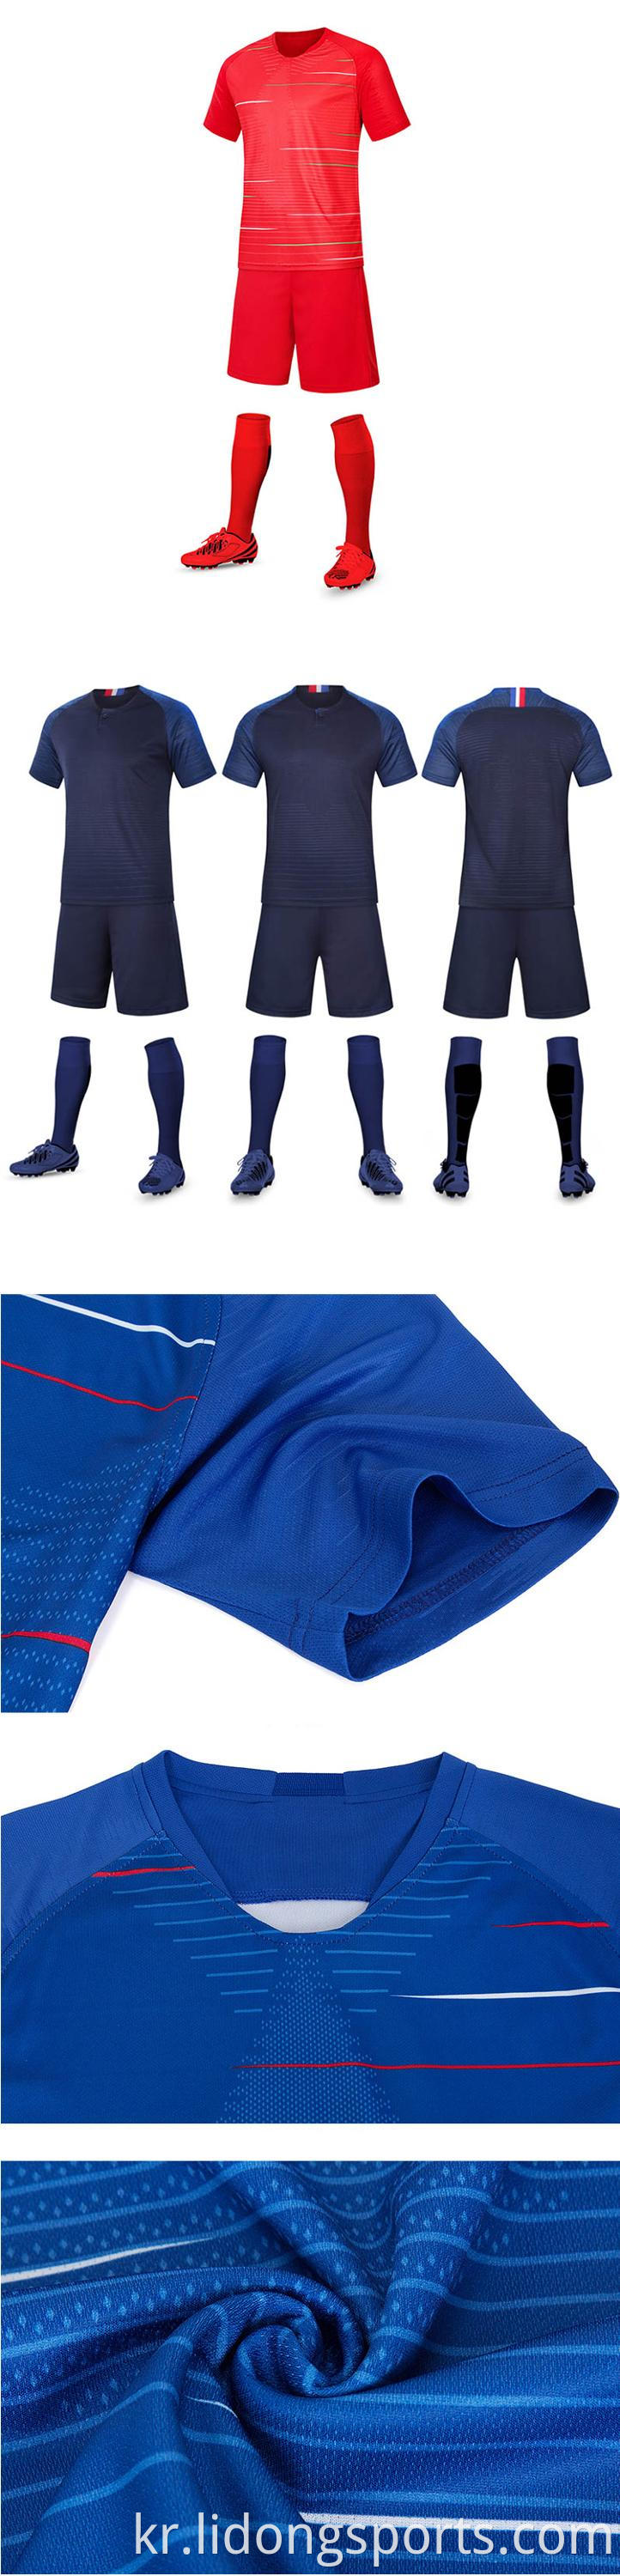 2021 Custom Sports Jersey New Model 축구 착용 티셔츠 풋볼 저지 세트 판매